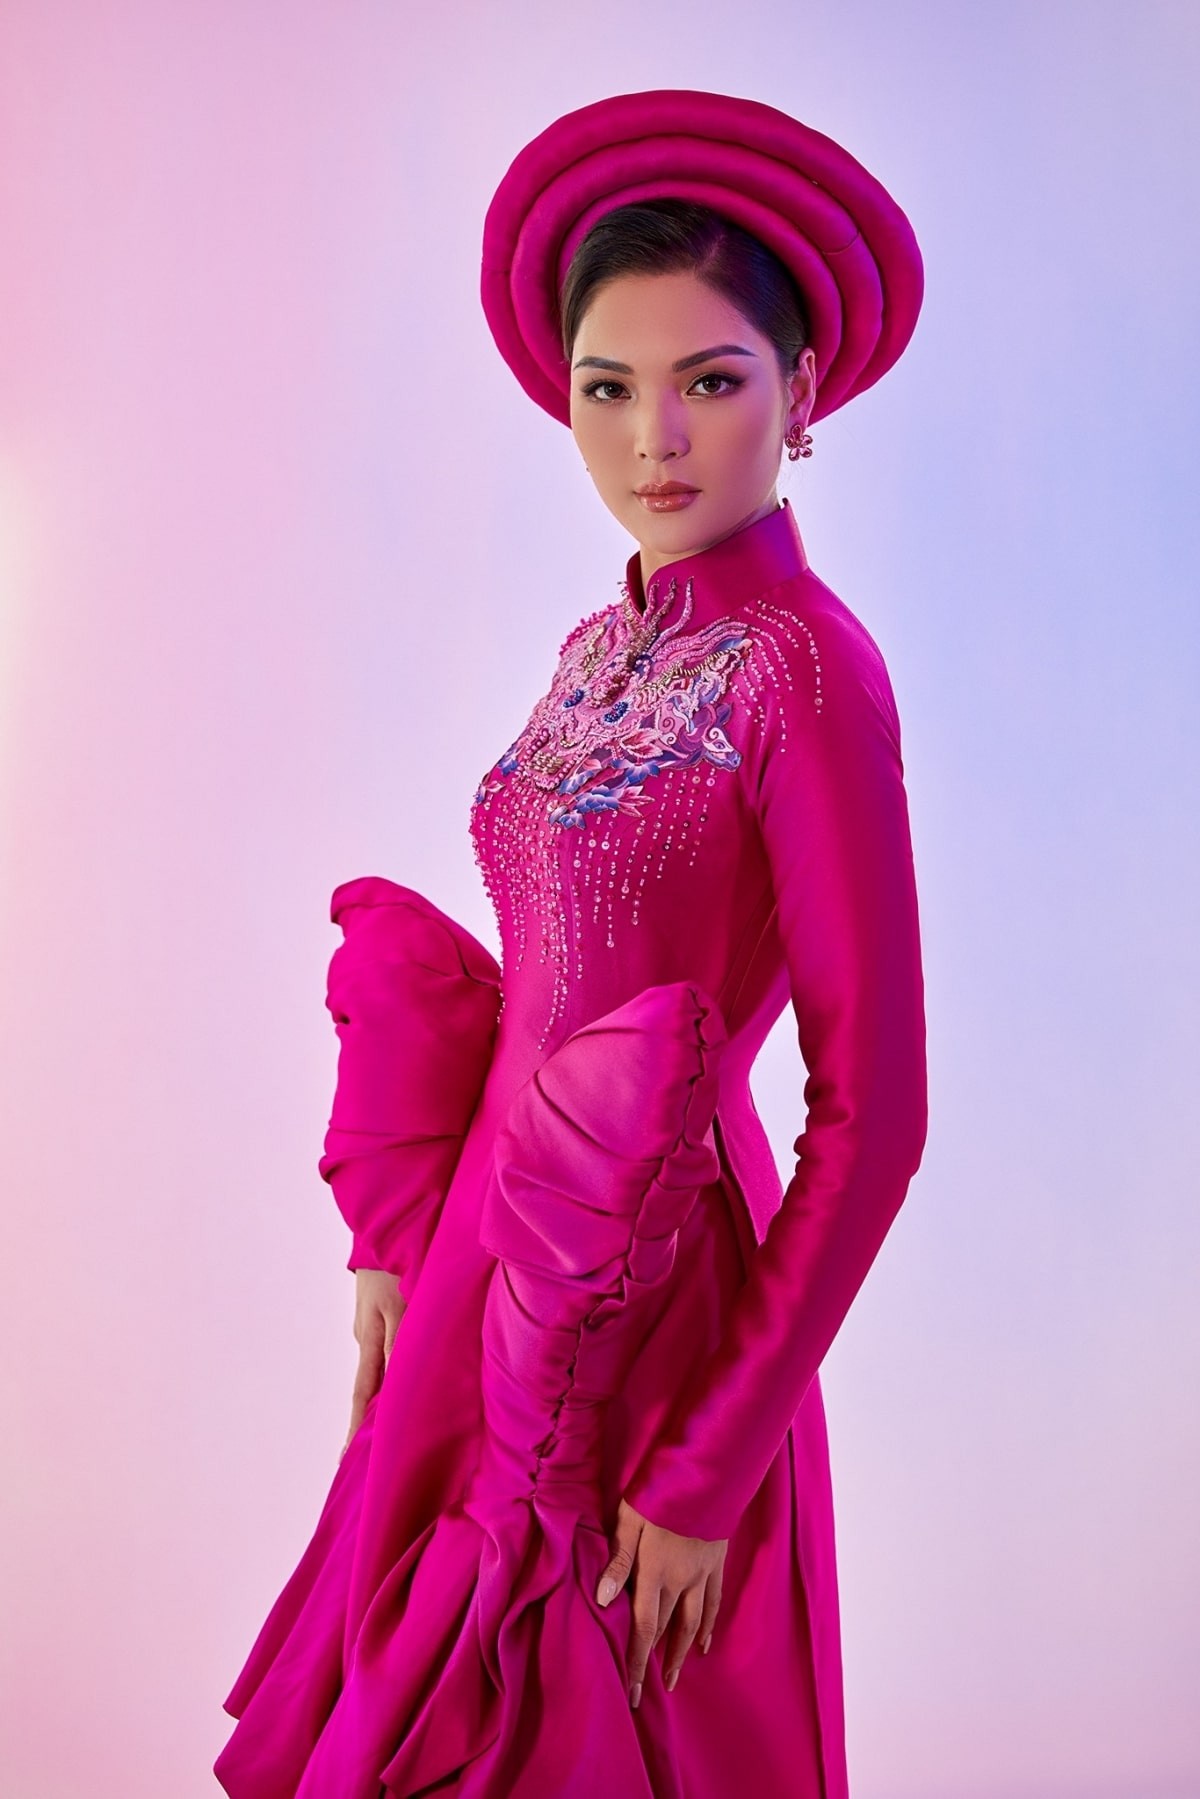 Vietnamese Representative Named among Top 20 Ahead of Miss Earth 2021